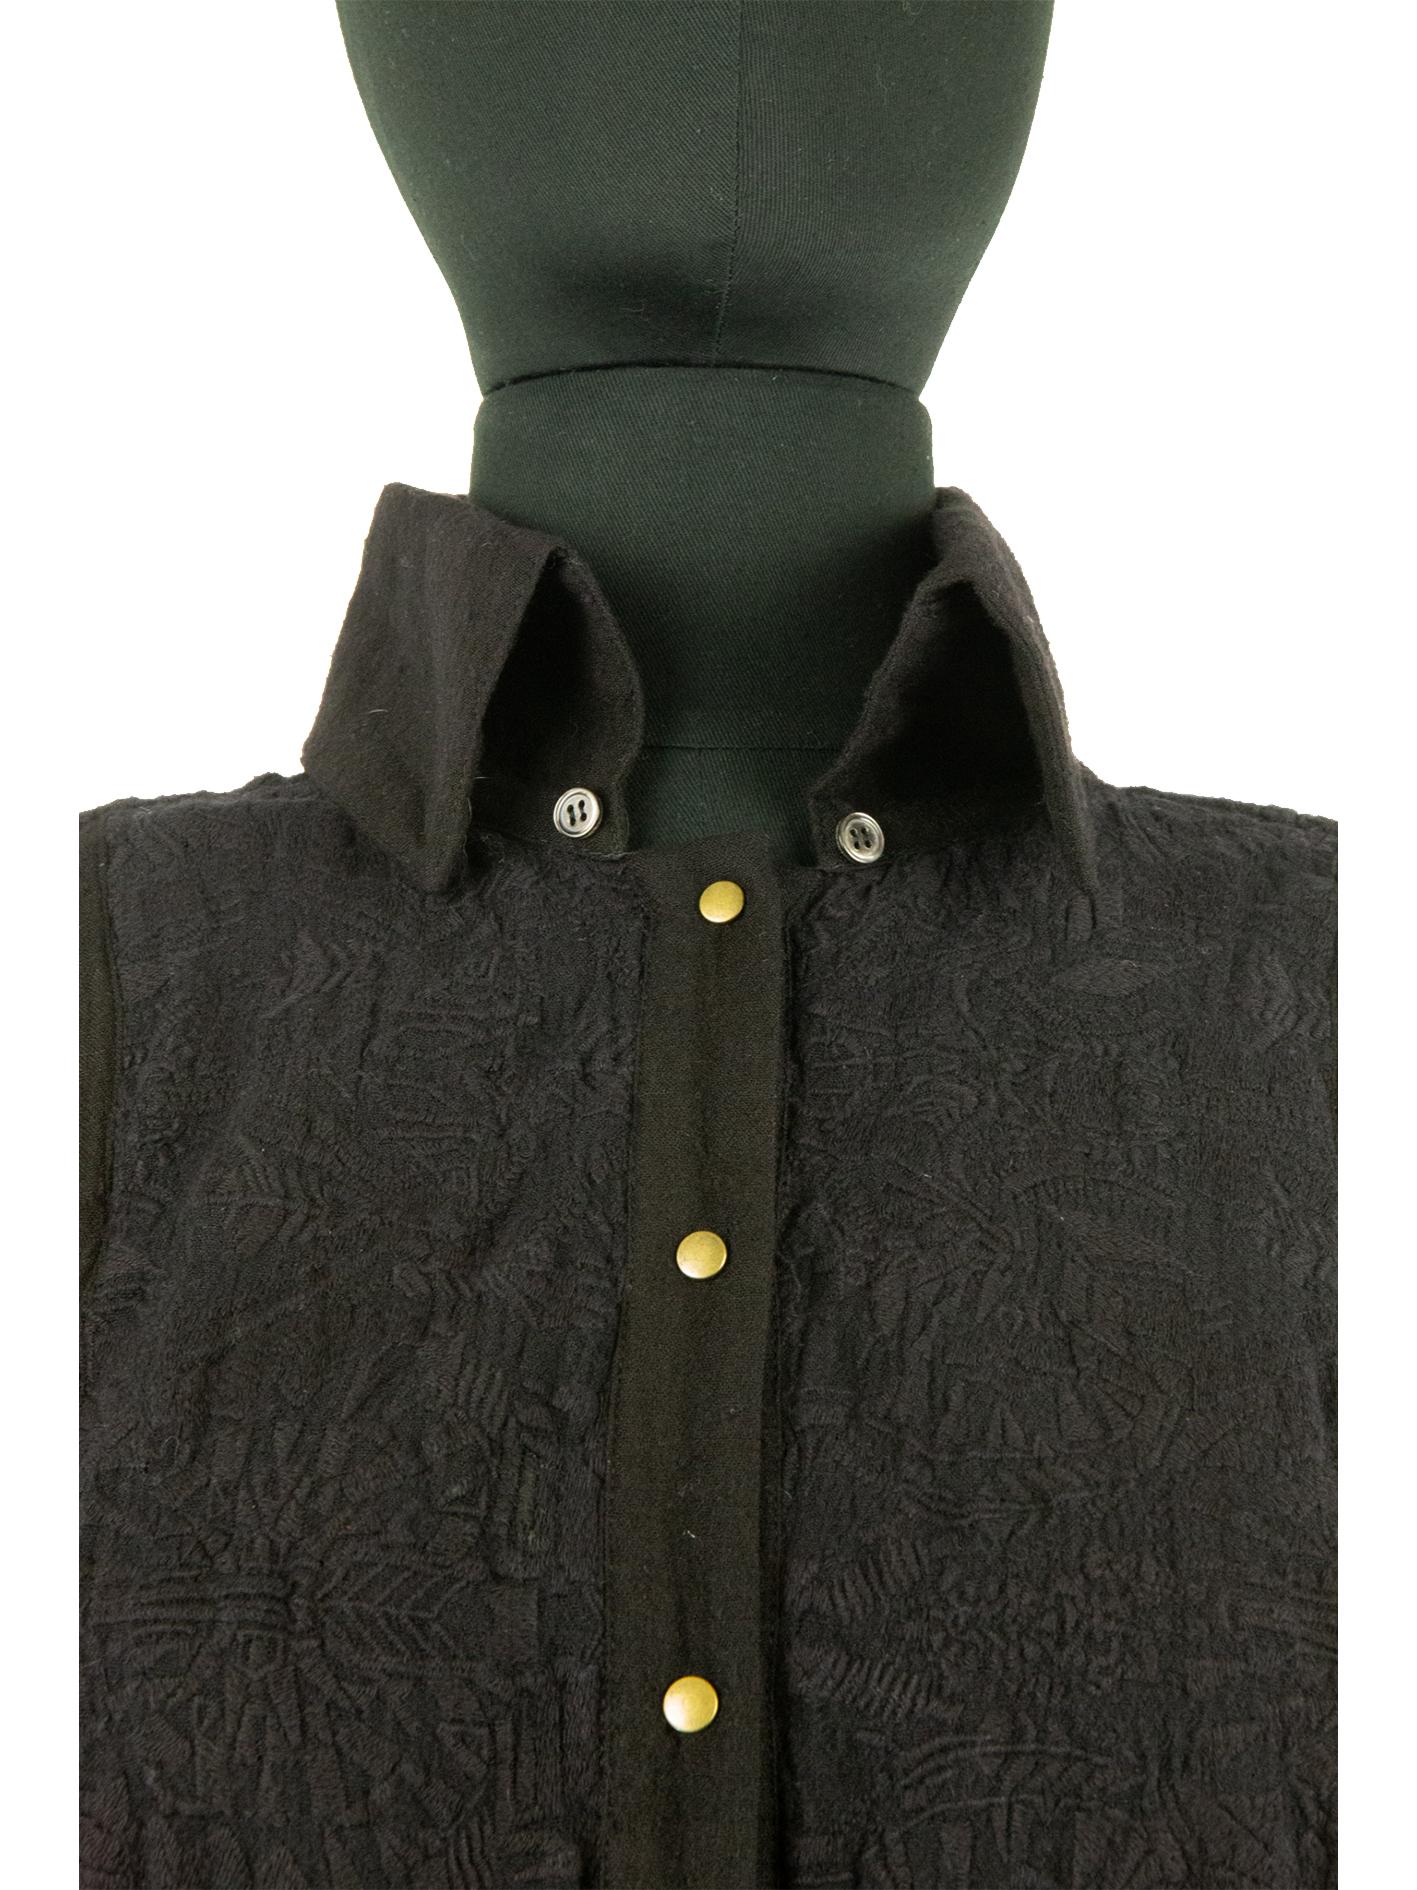 Balmain Black Shirt With Brass Detail For Sale 2